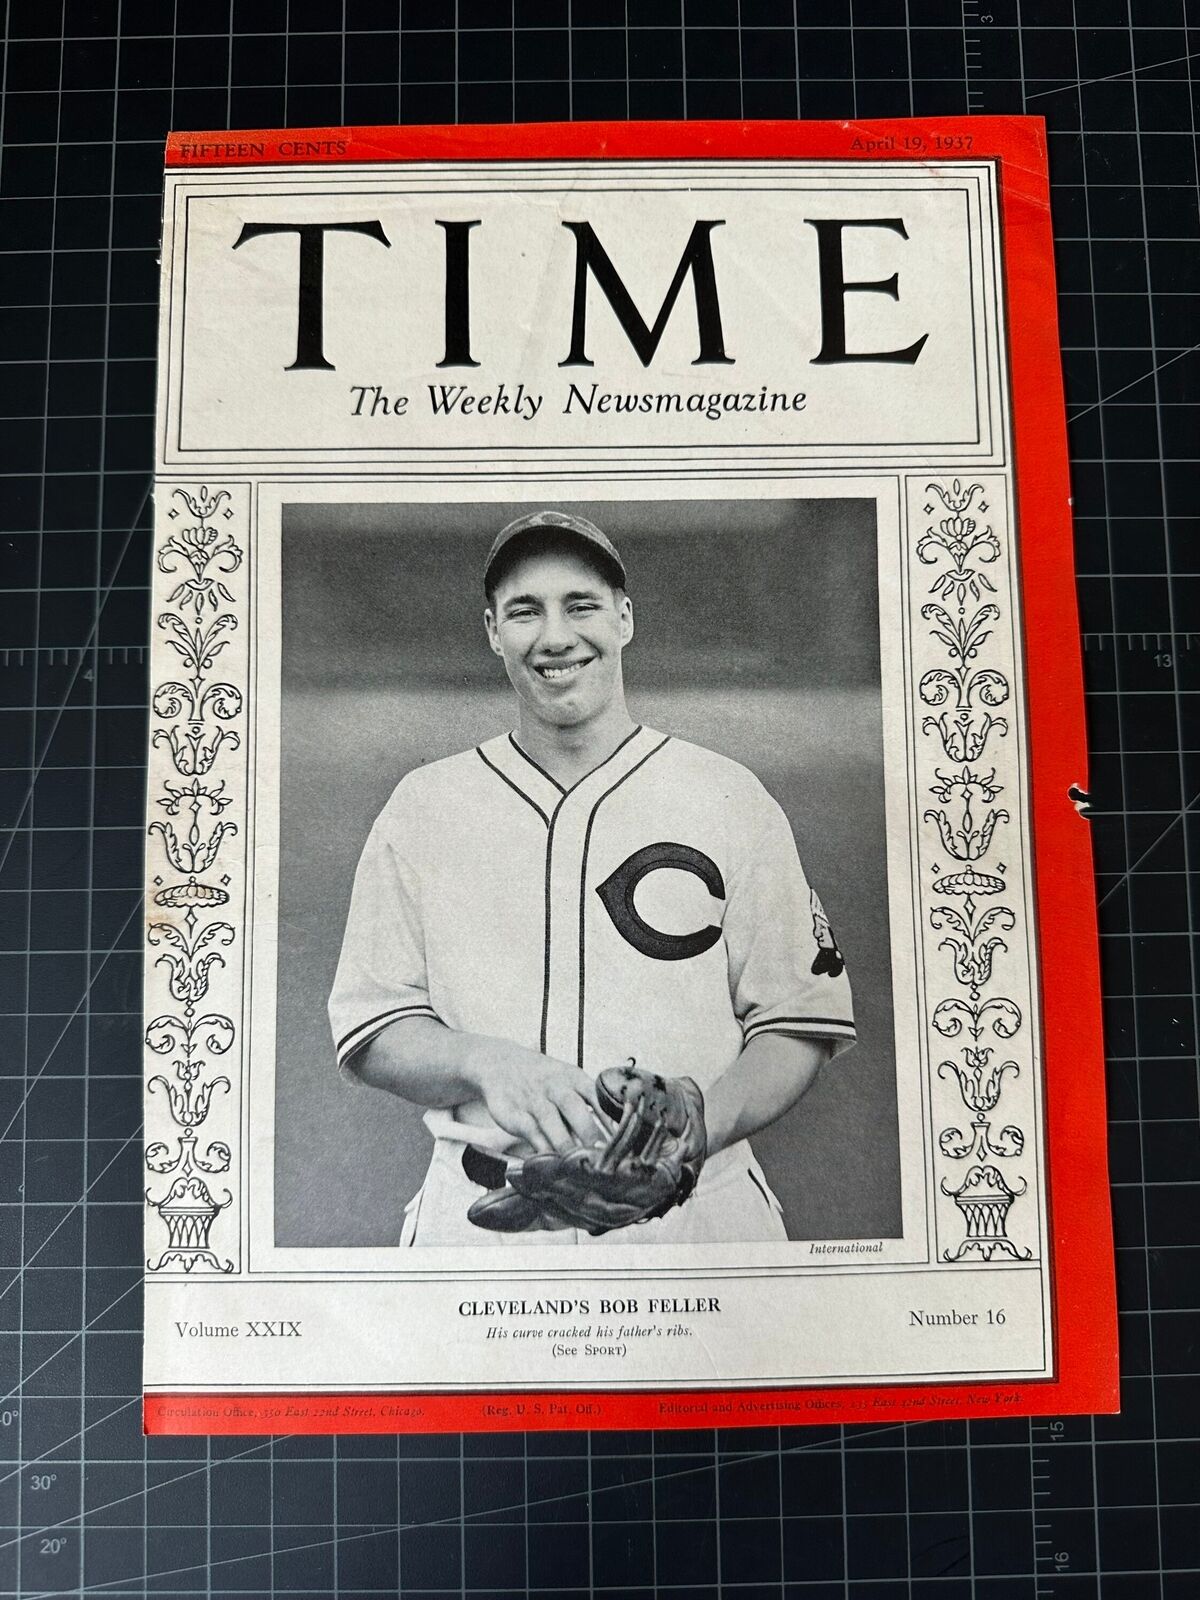 Rare Vintage 1937 Time Magazine Cover - Cleveland’s Bob Feller Baseball - COVER